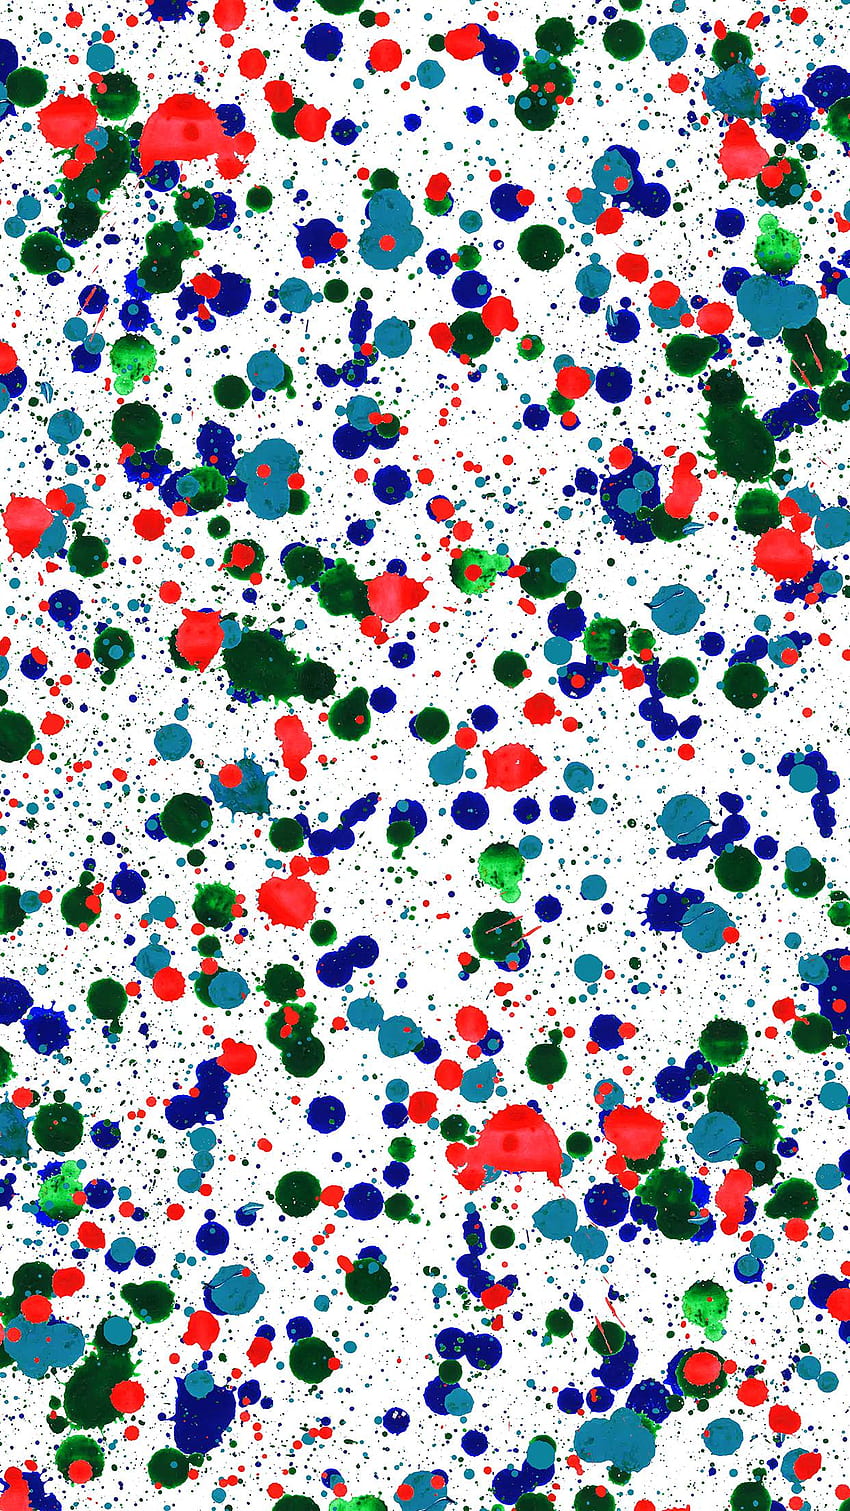 Hebat dari Warna dengan Angka - DI BALIK JAHITAN, Jackson Pollock wallpaper ponsel HD